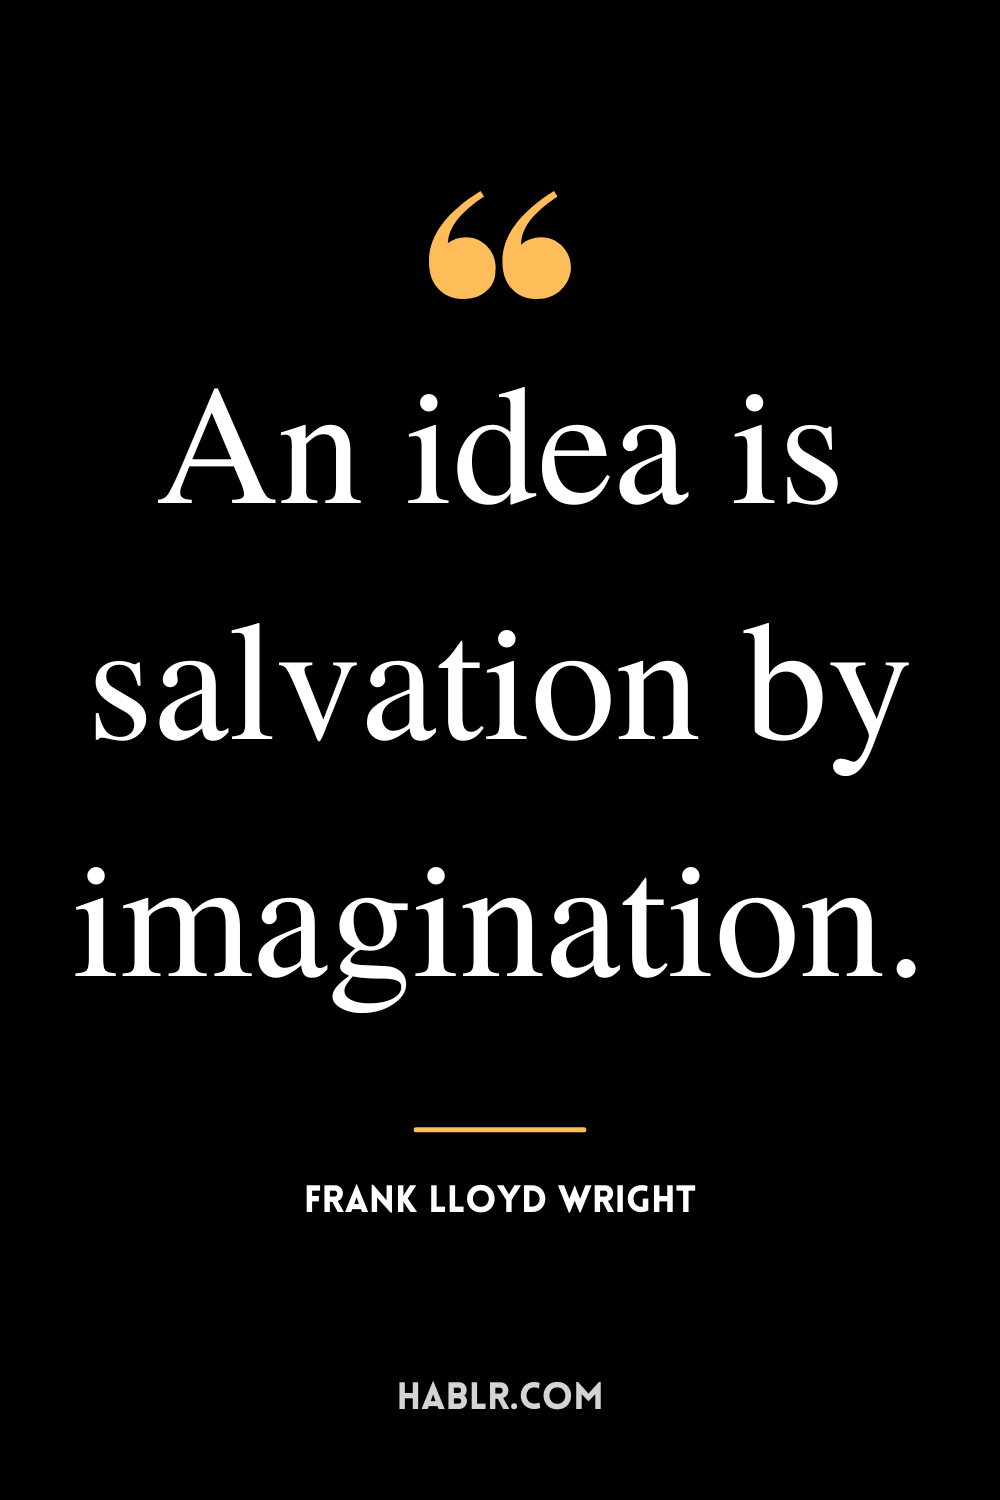 "An idea is salvation by imagination." -Frank Lloyd Wright